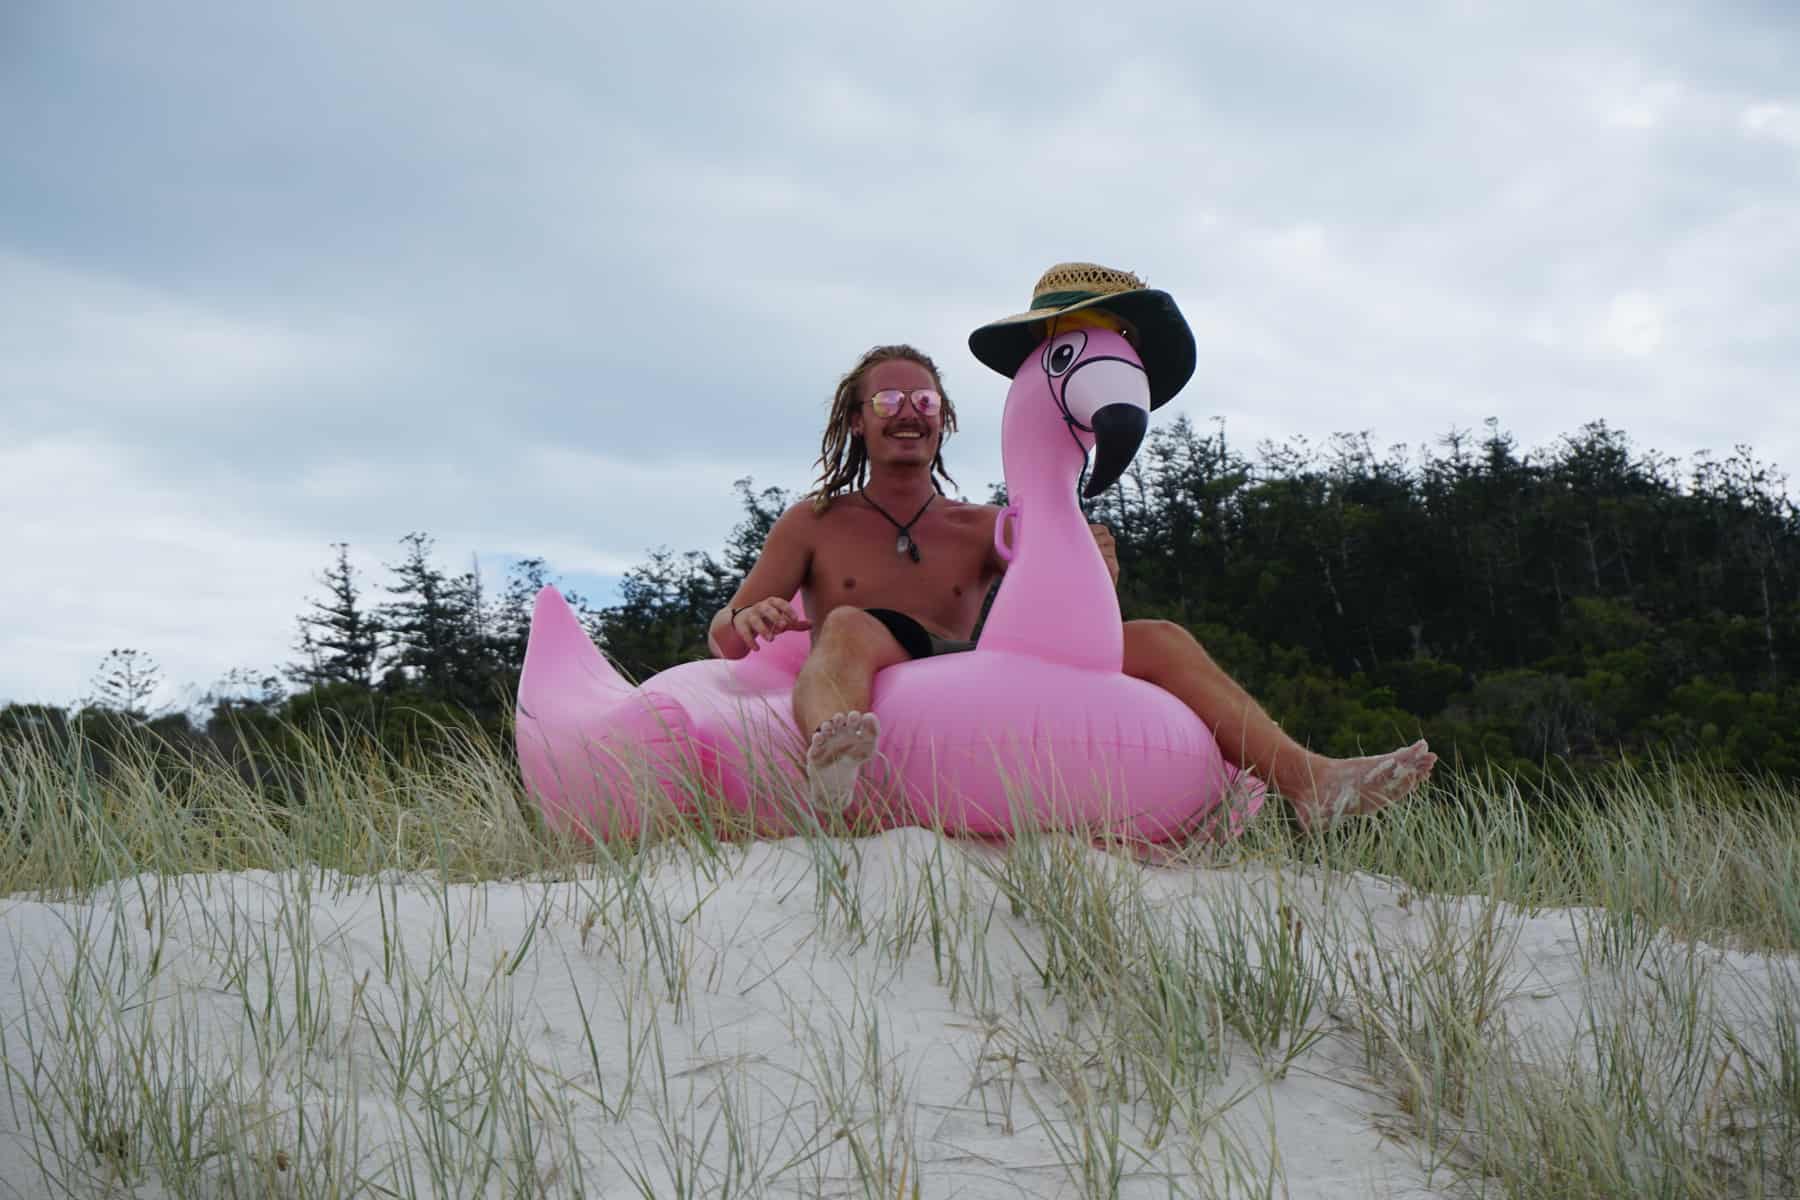 A man on a pink flamingo